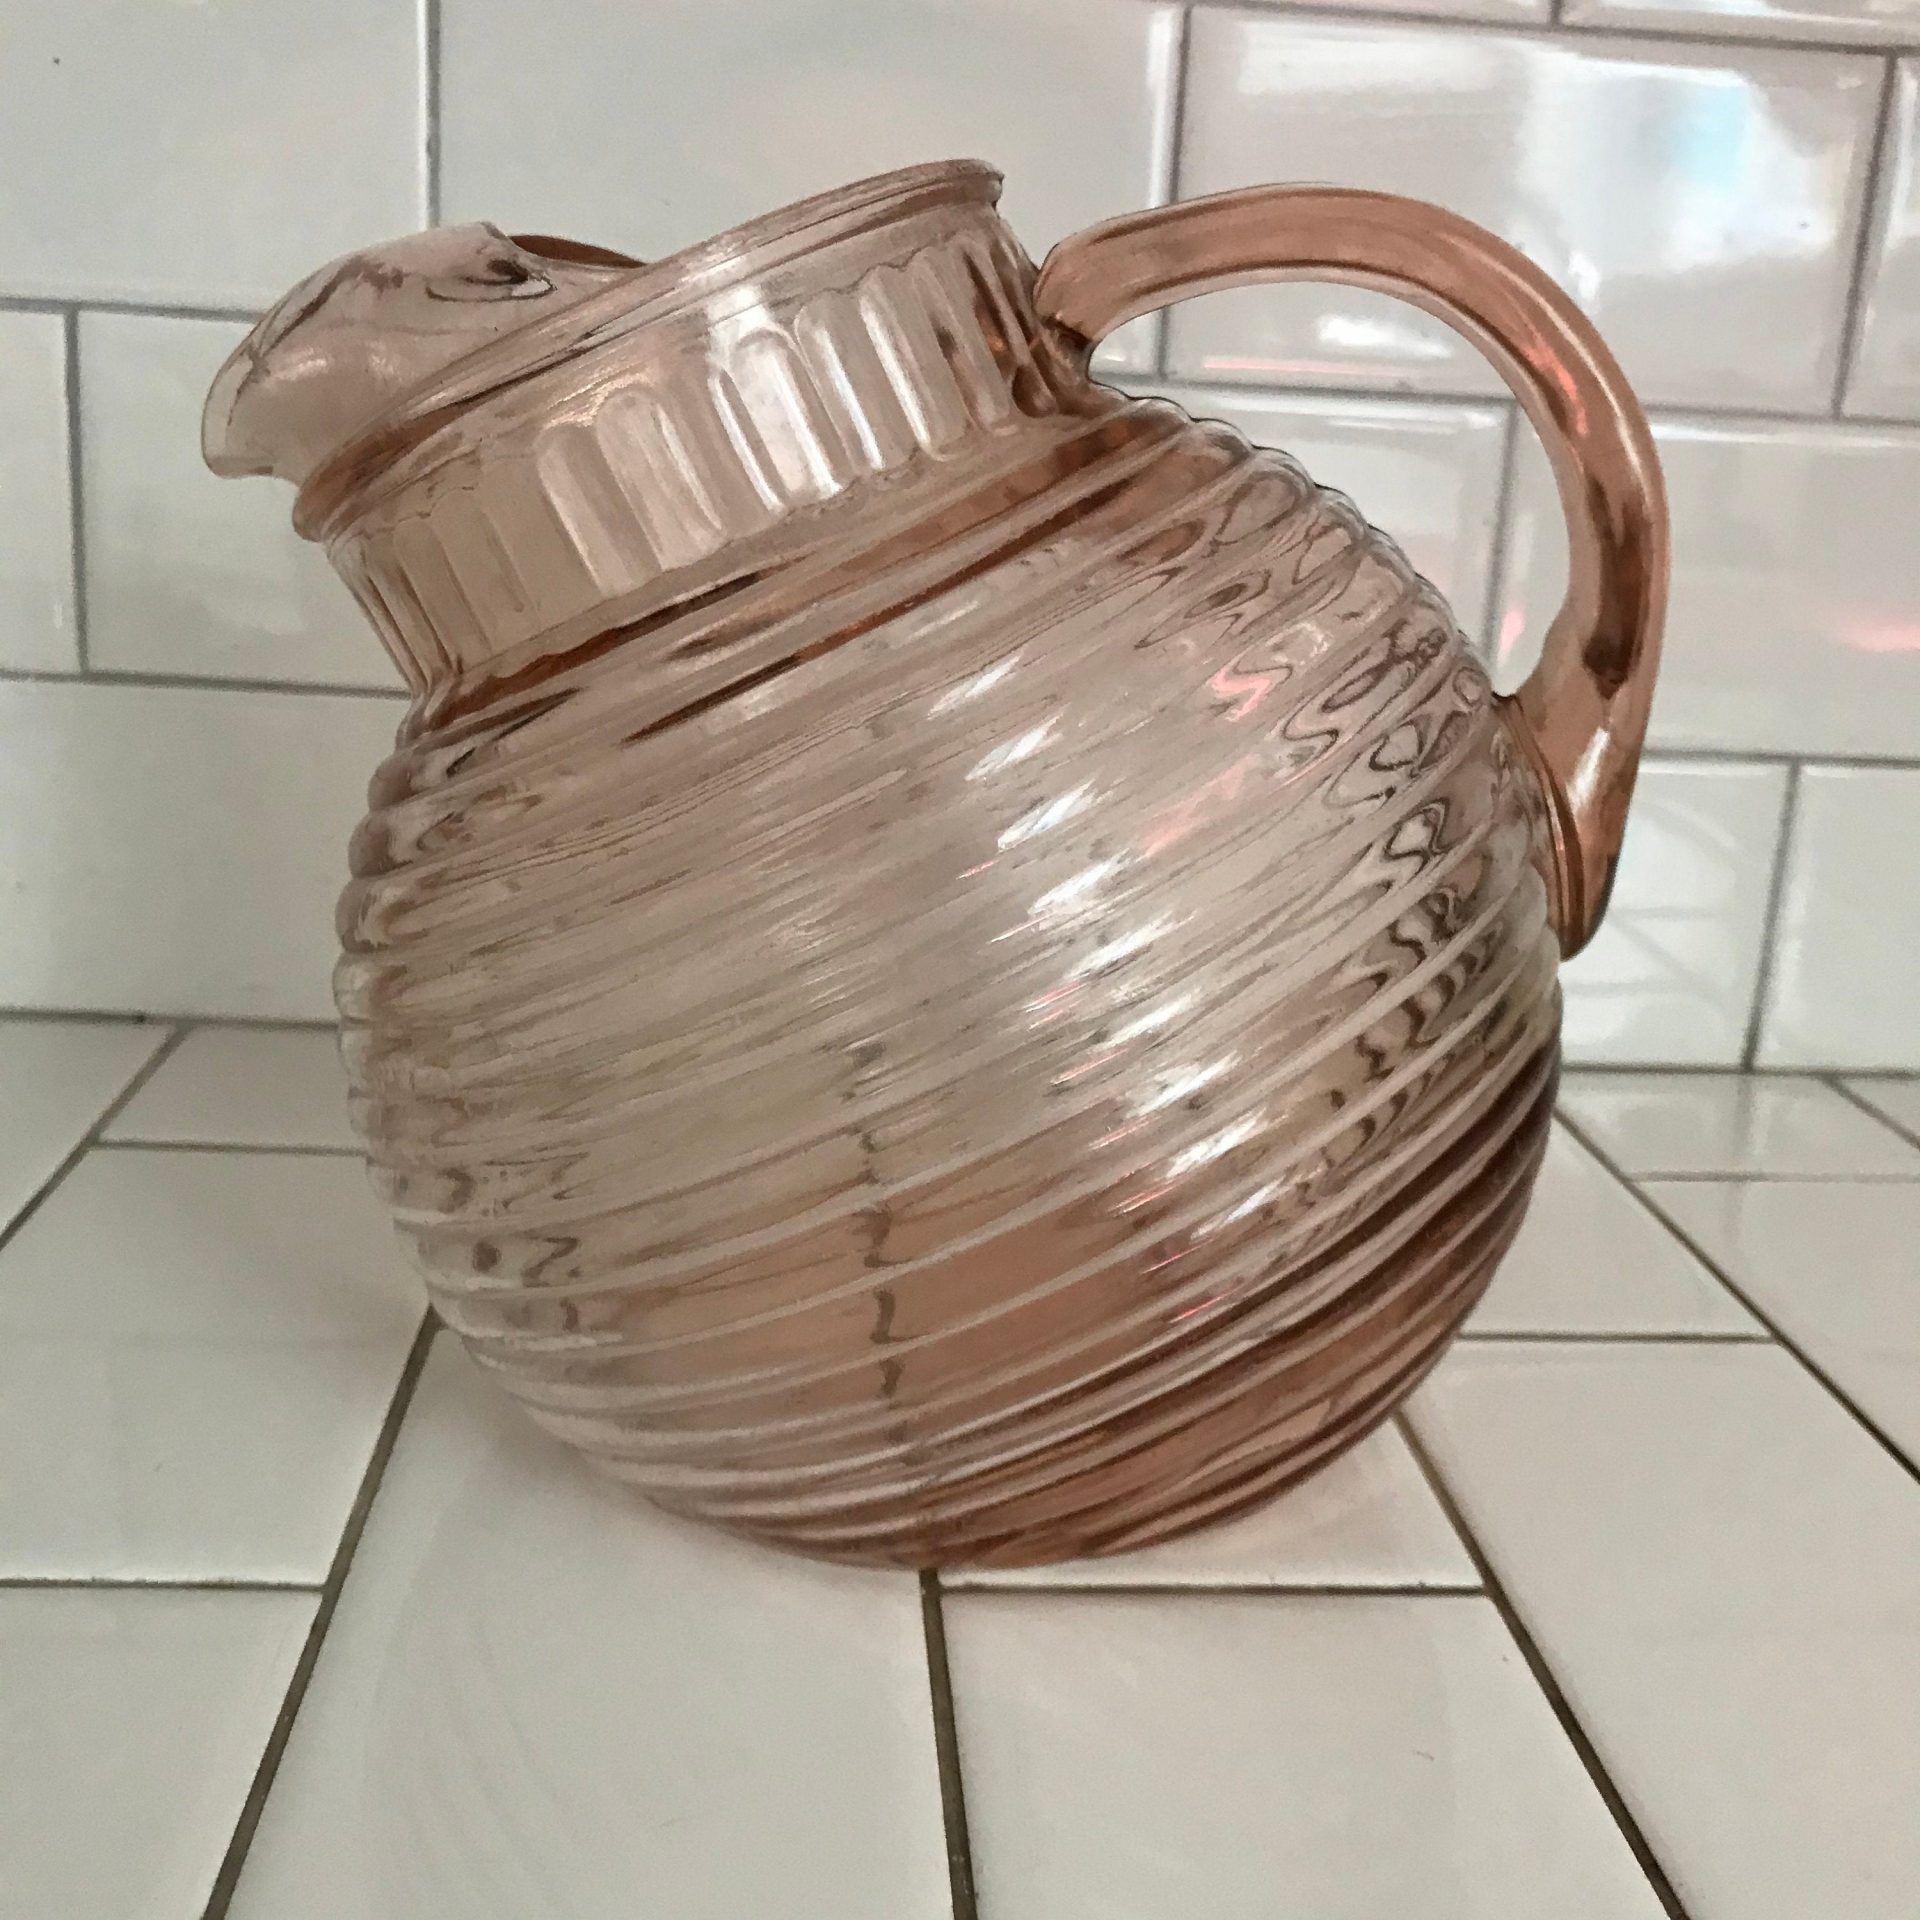 https://www.truevintageantiques.com/wp-content/uploads/2021/05/vintage-tilt-ball-pitcher-pink-ribbed-glass-depression-era-collectible-display-farmhouse-cottage-60990b686-scaled.jpg